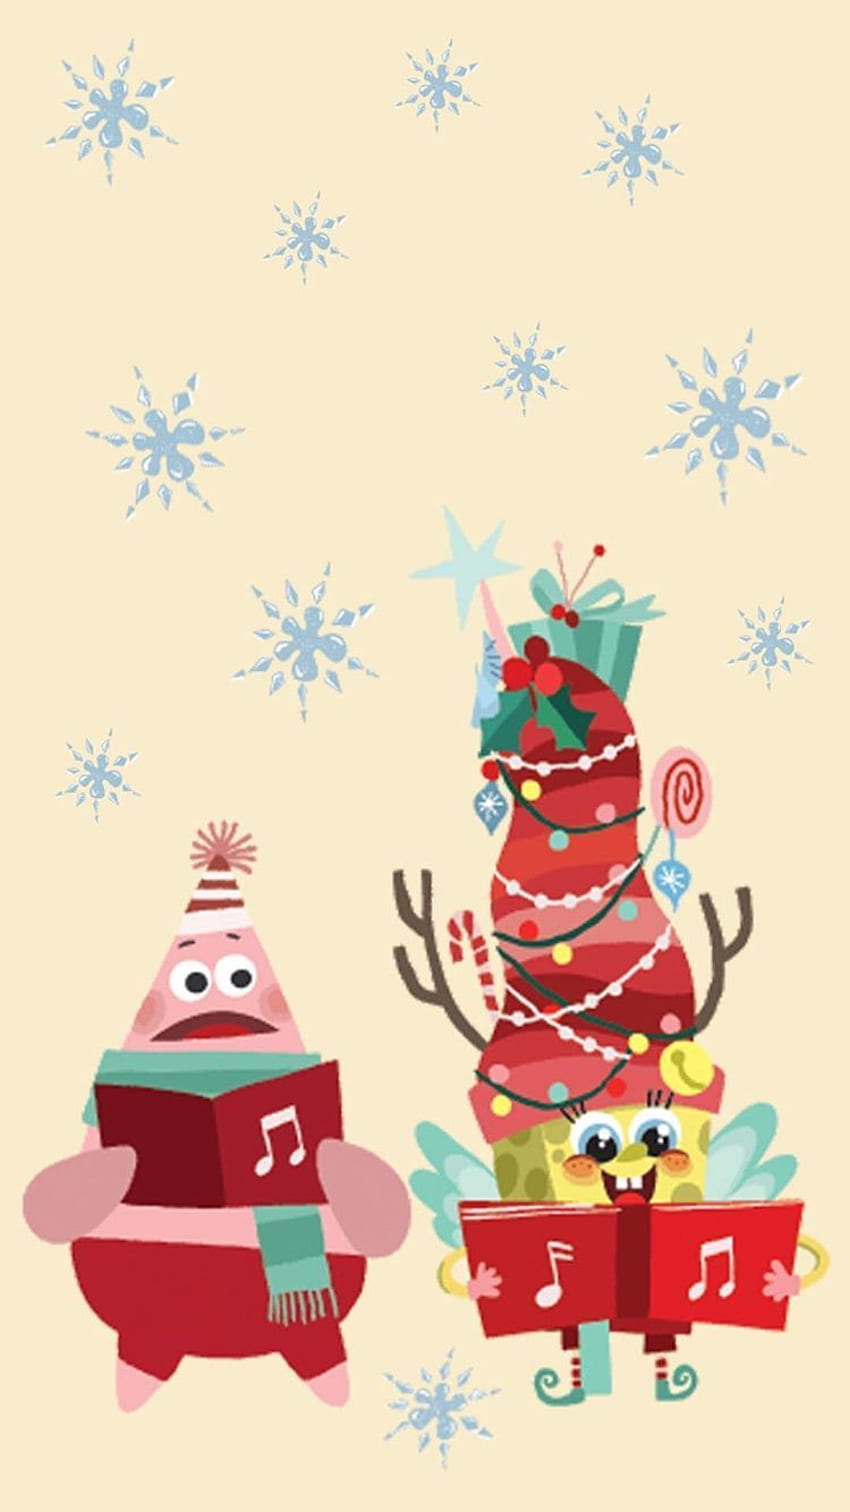 Spongebob and Patrick Christmas wallpaper  Spongebob Squarepants Wallpaper  40637561  Fanpop